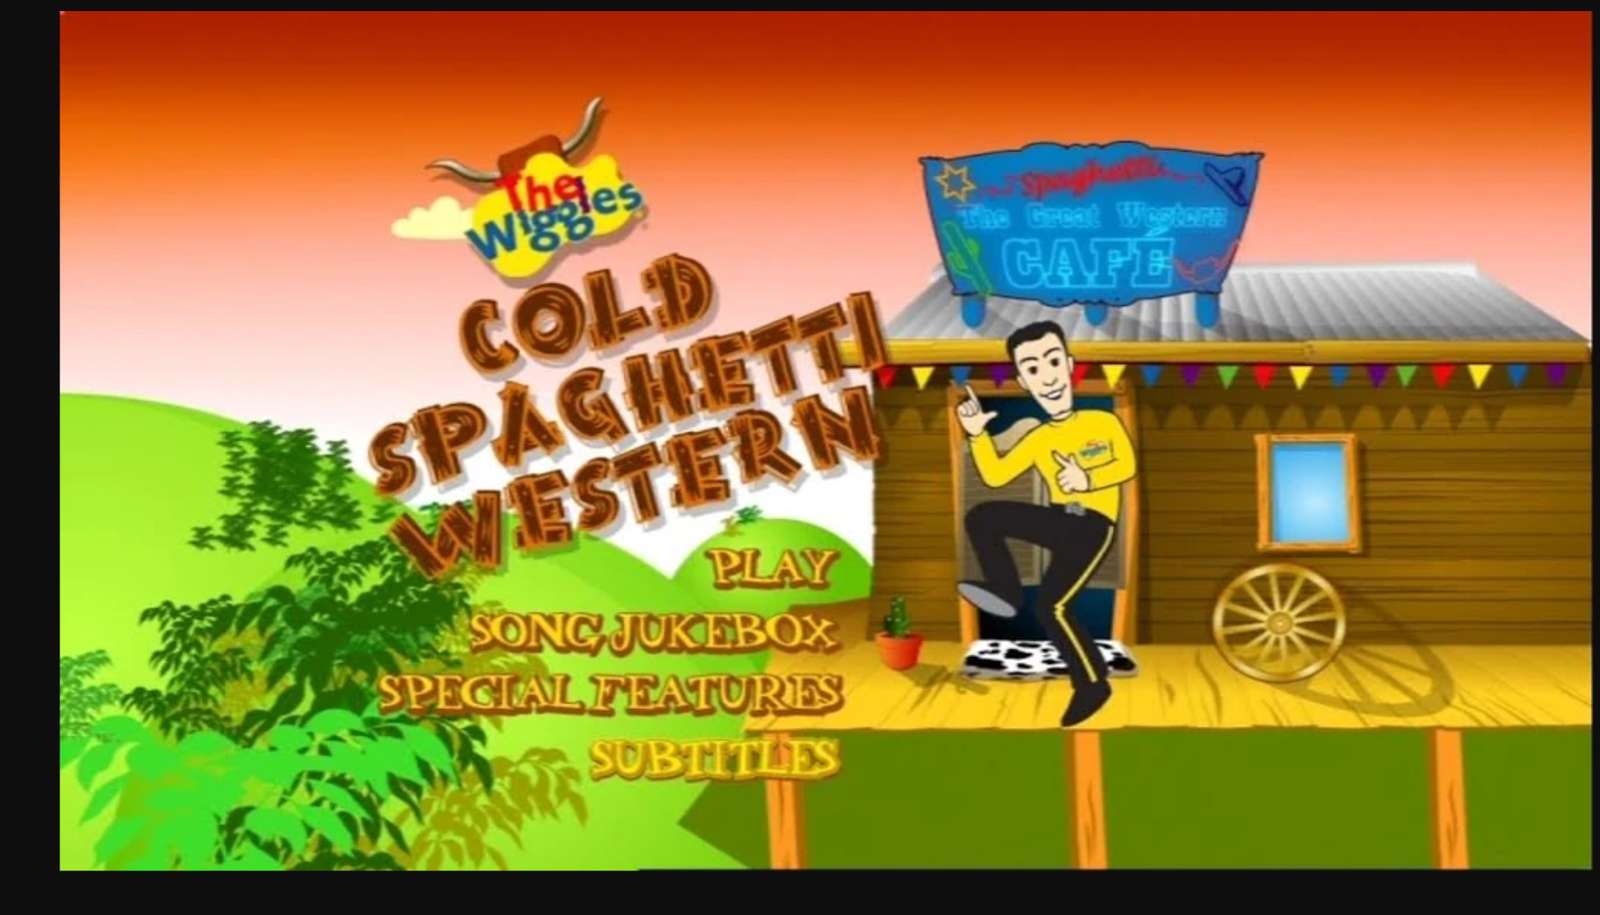 Studené spaghetti Western DVD Menu se třese 2004 online puzzle